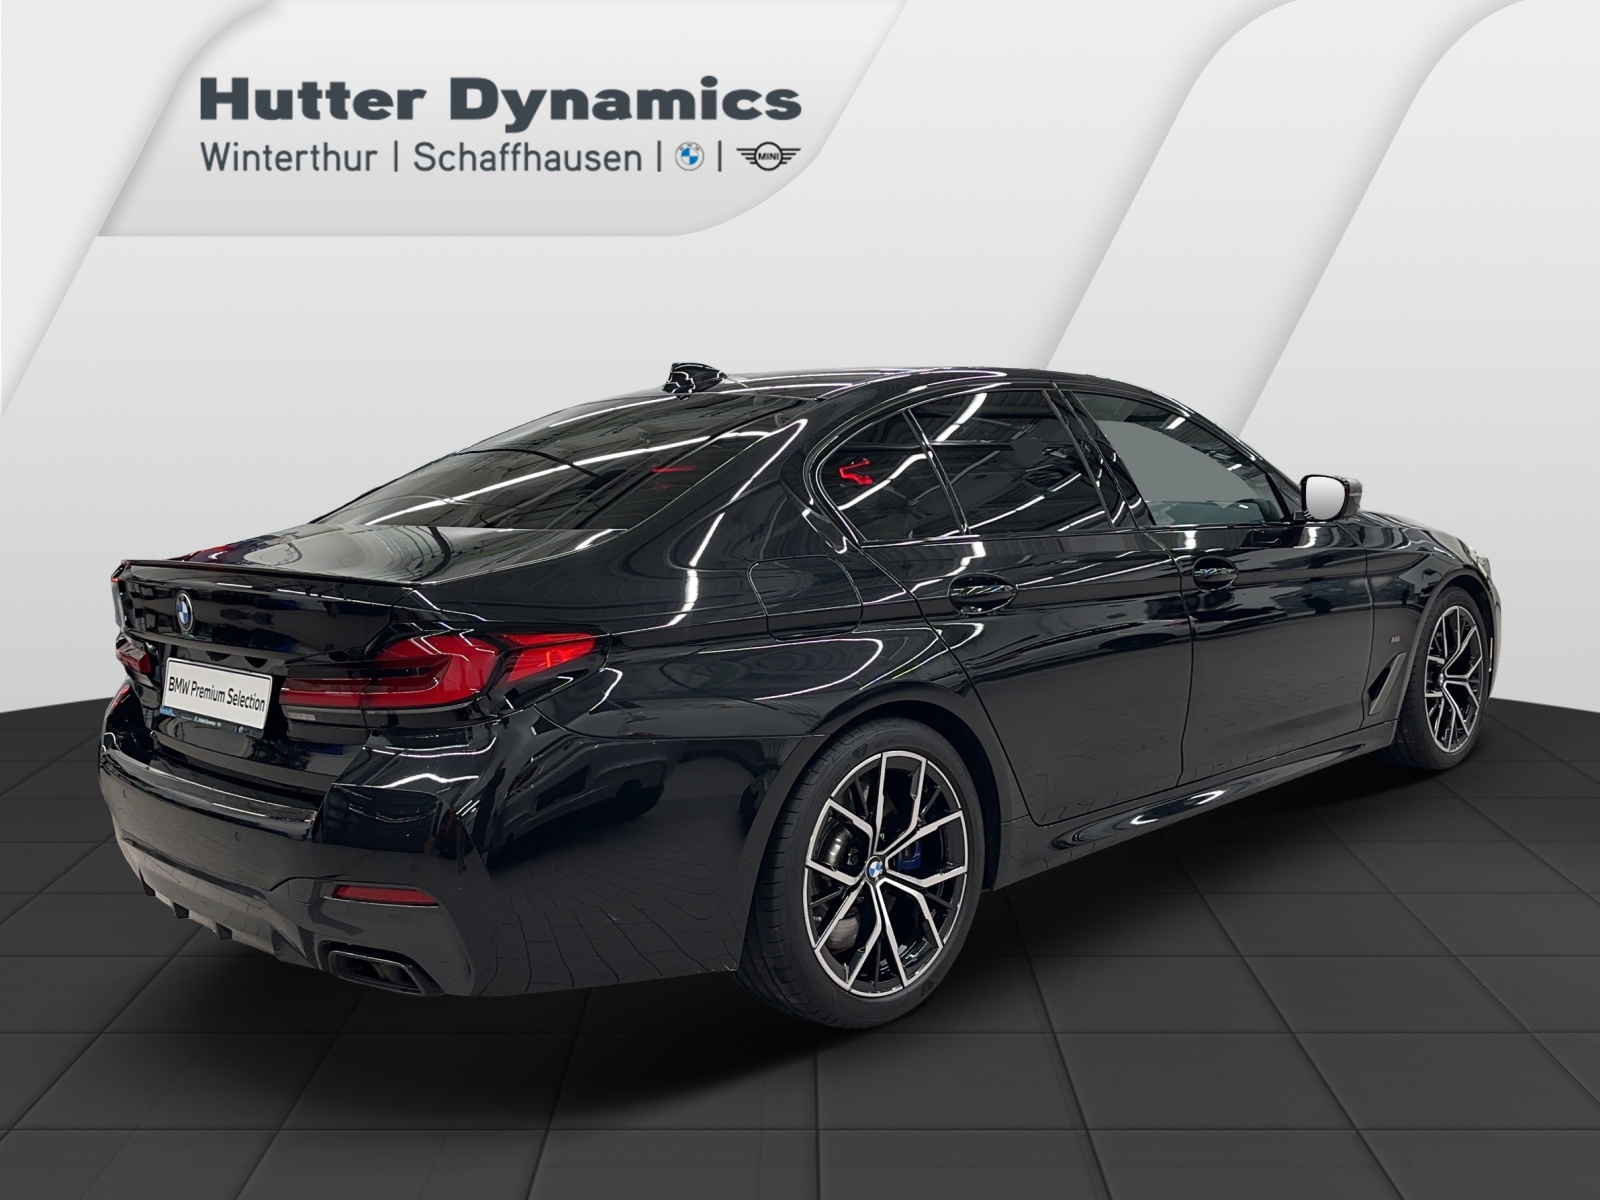 BMW M135i xDrive  Hutter Dynamics AG